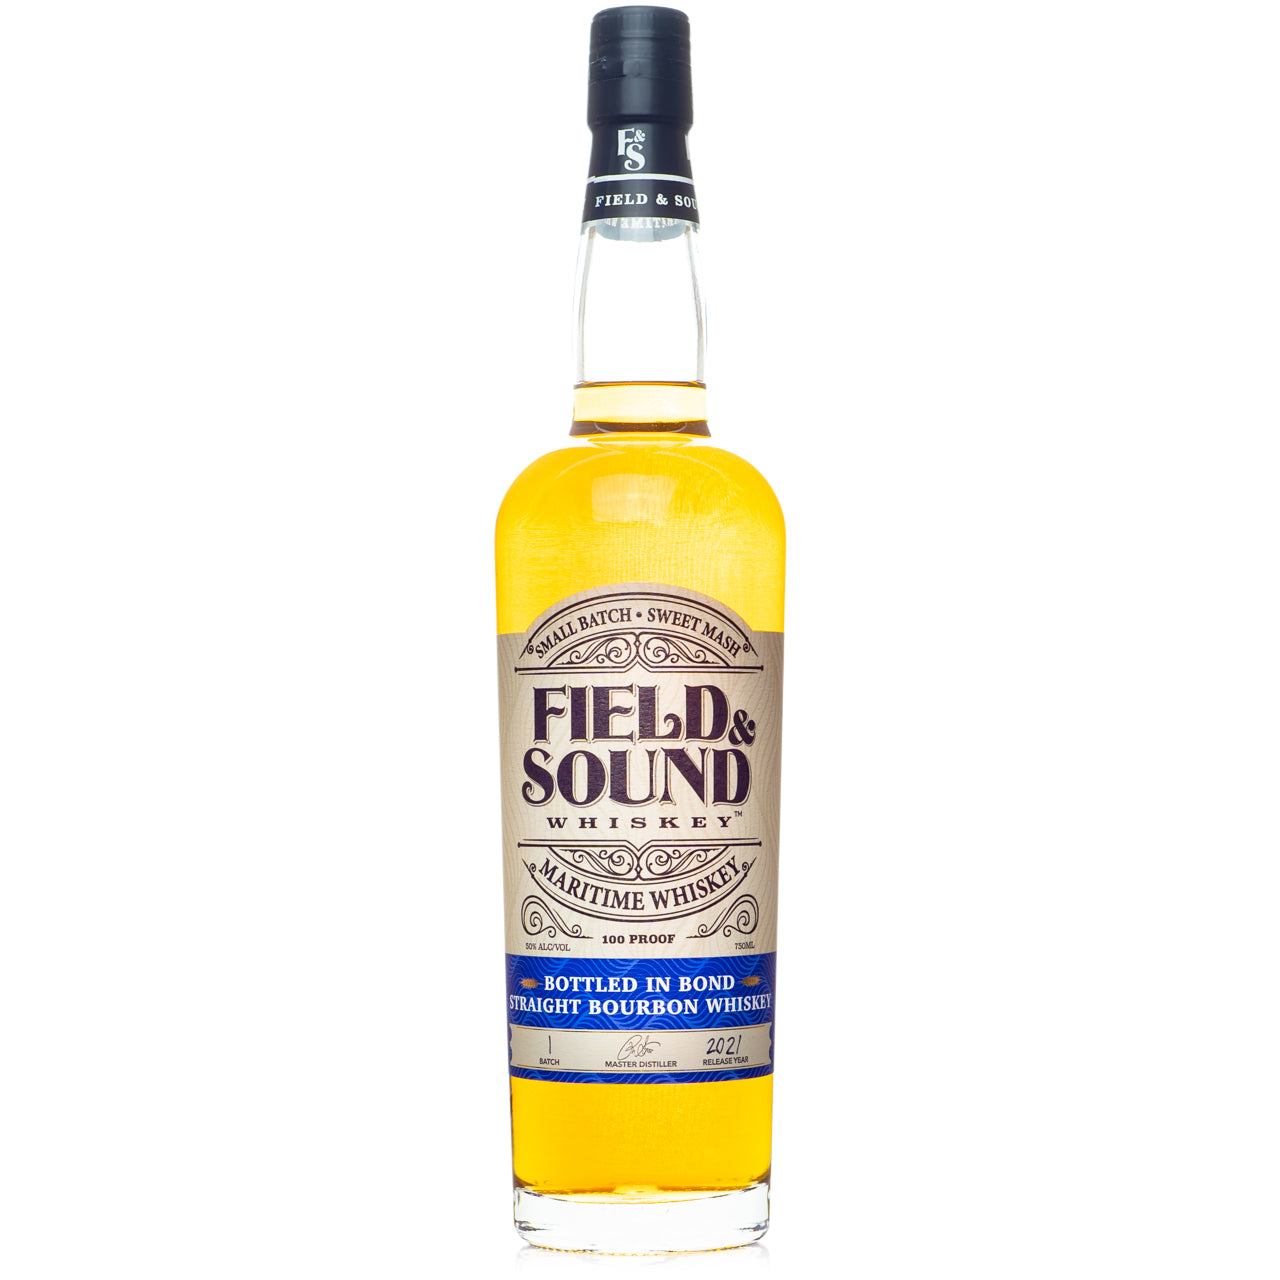 Field & Sound "Batch 2" Bottled in Bond Bourbon